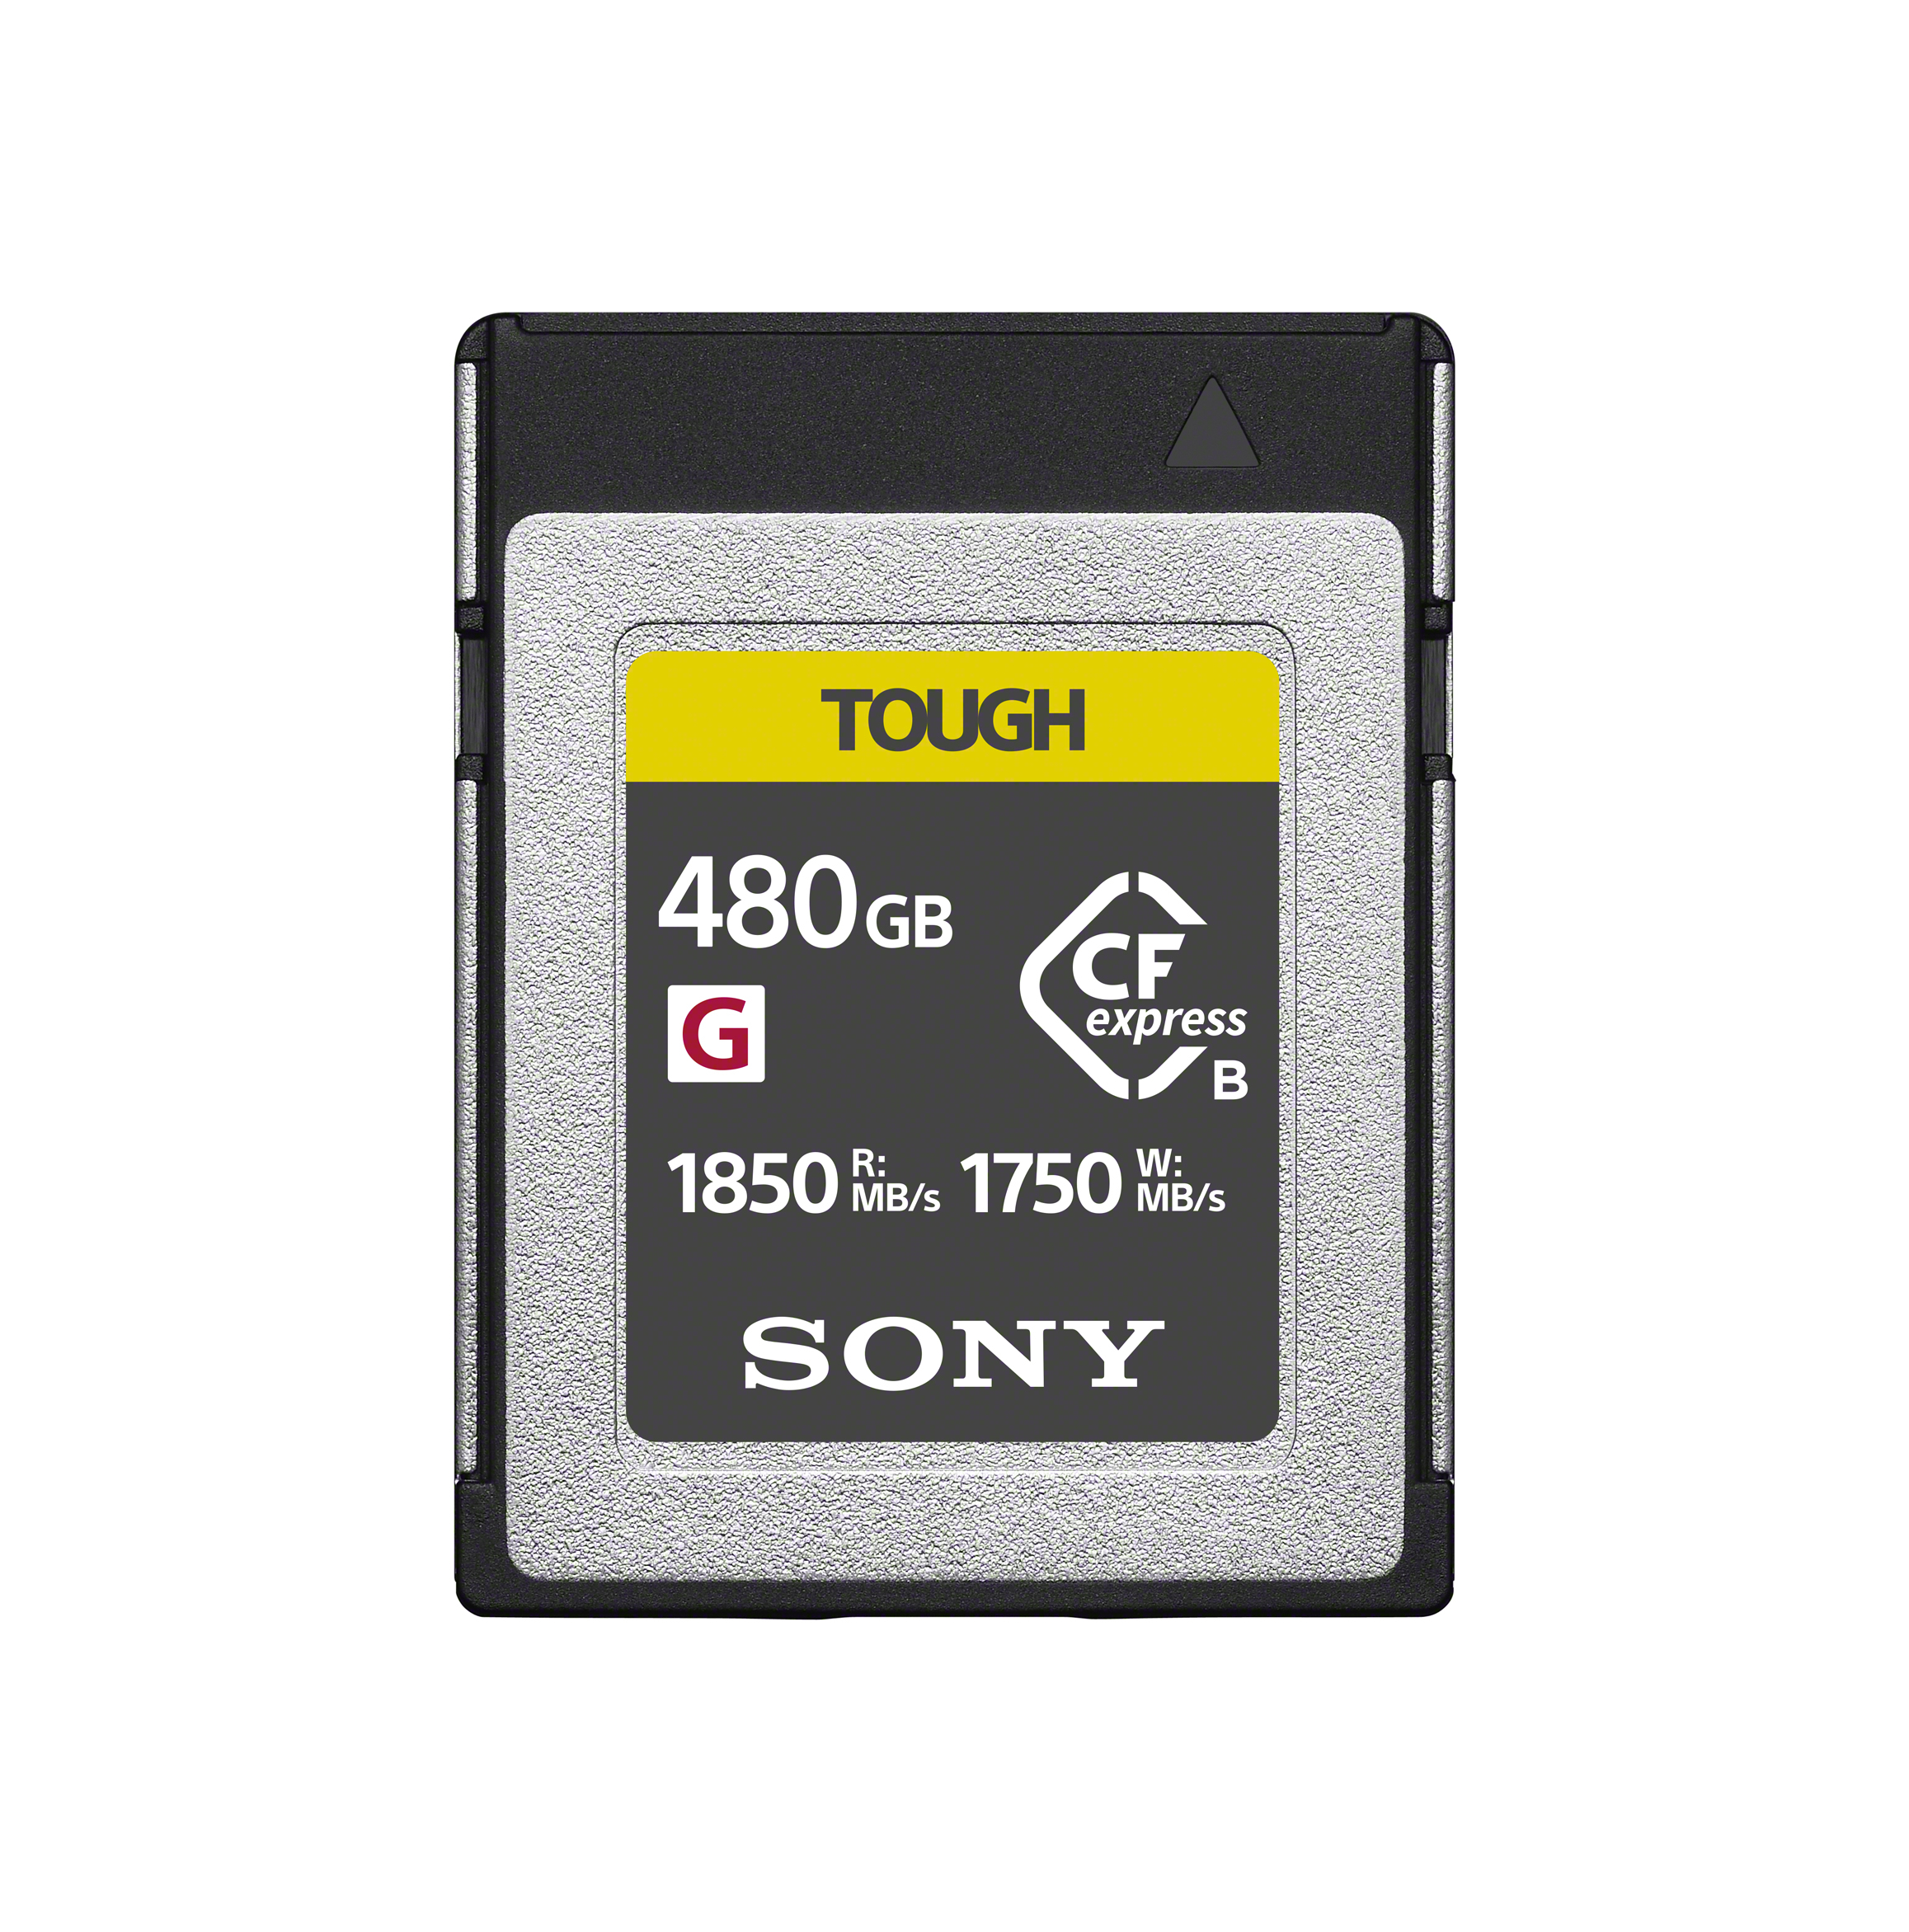 Sony CFexpress Type B 480GB R 1850MB/s W 1750MB/s